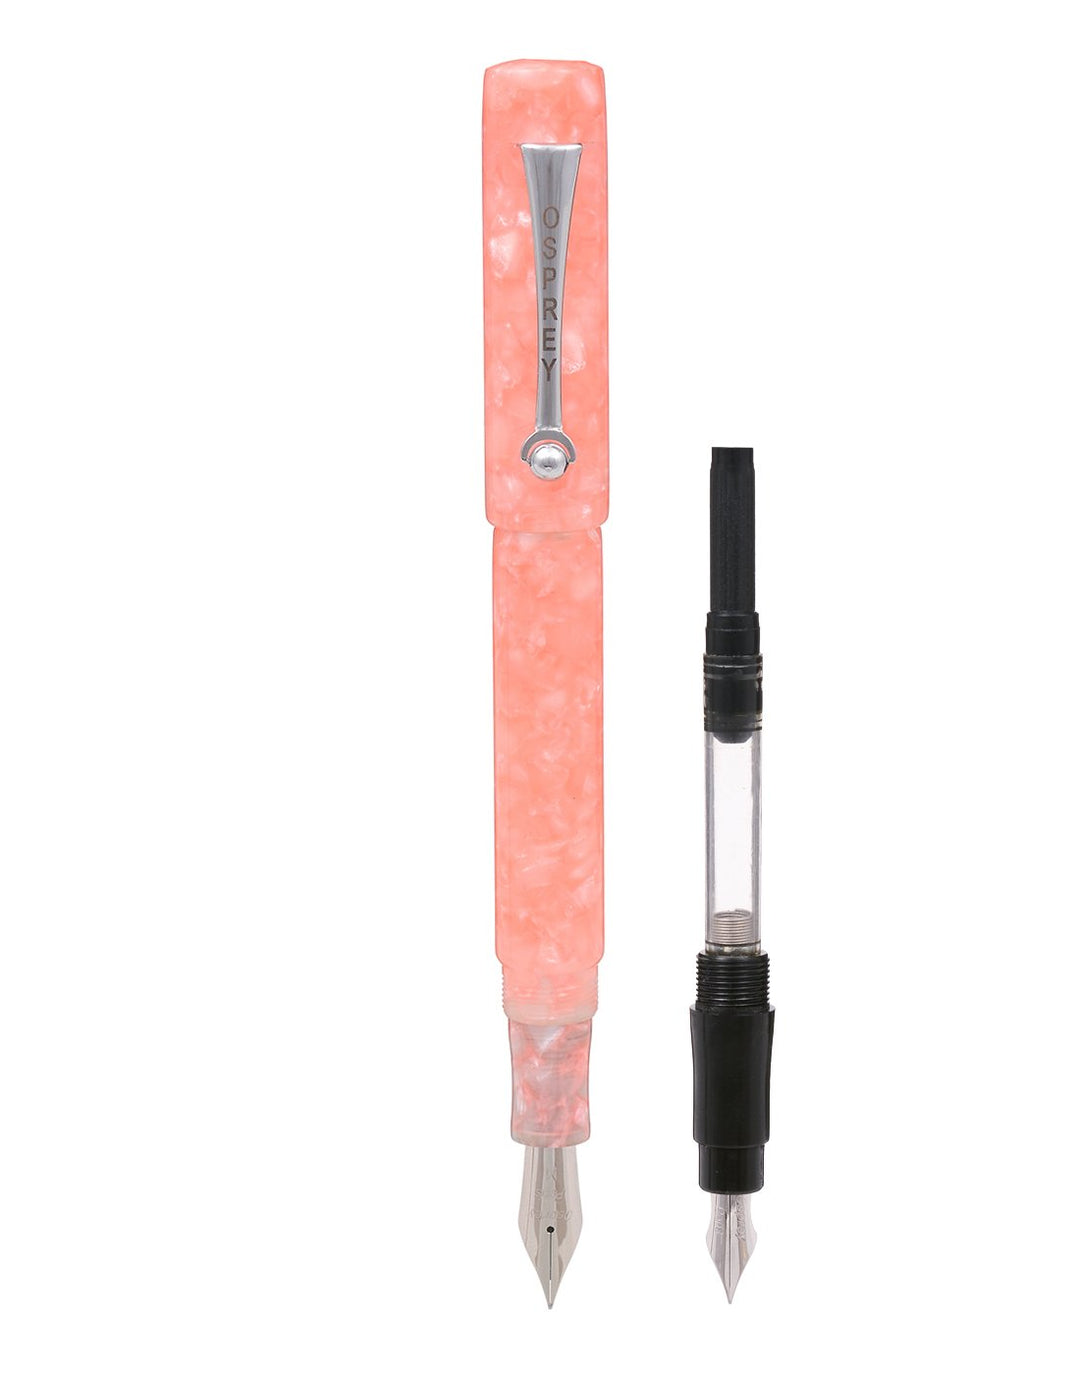 OSPREY PENS - MILANO Fountain Pen "Rose Quartz" With Standard And Flex Nib Options - Buchan's Kerrisdale Stationery